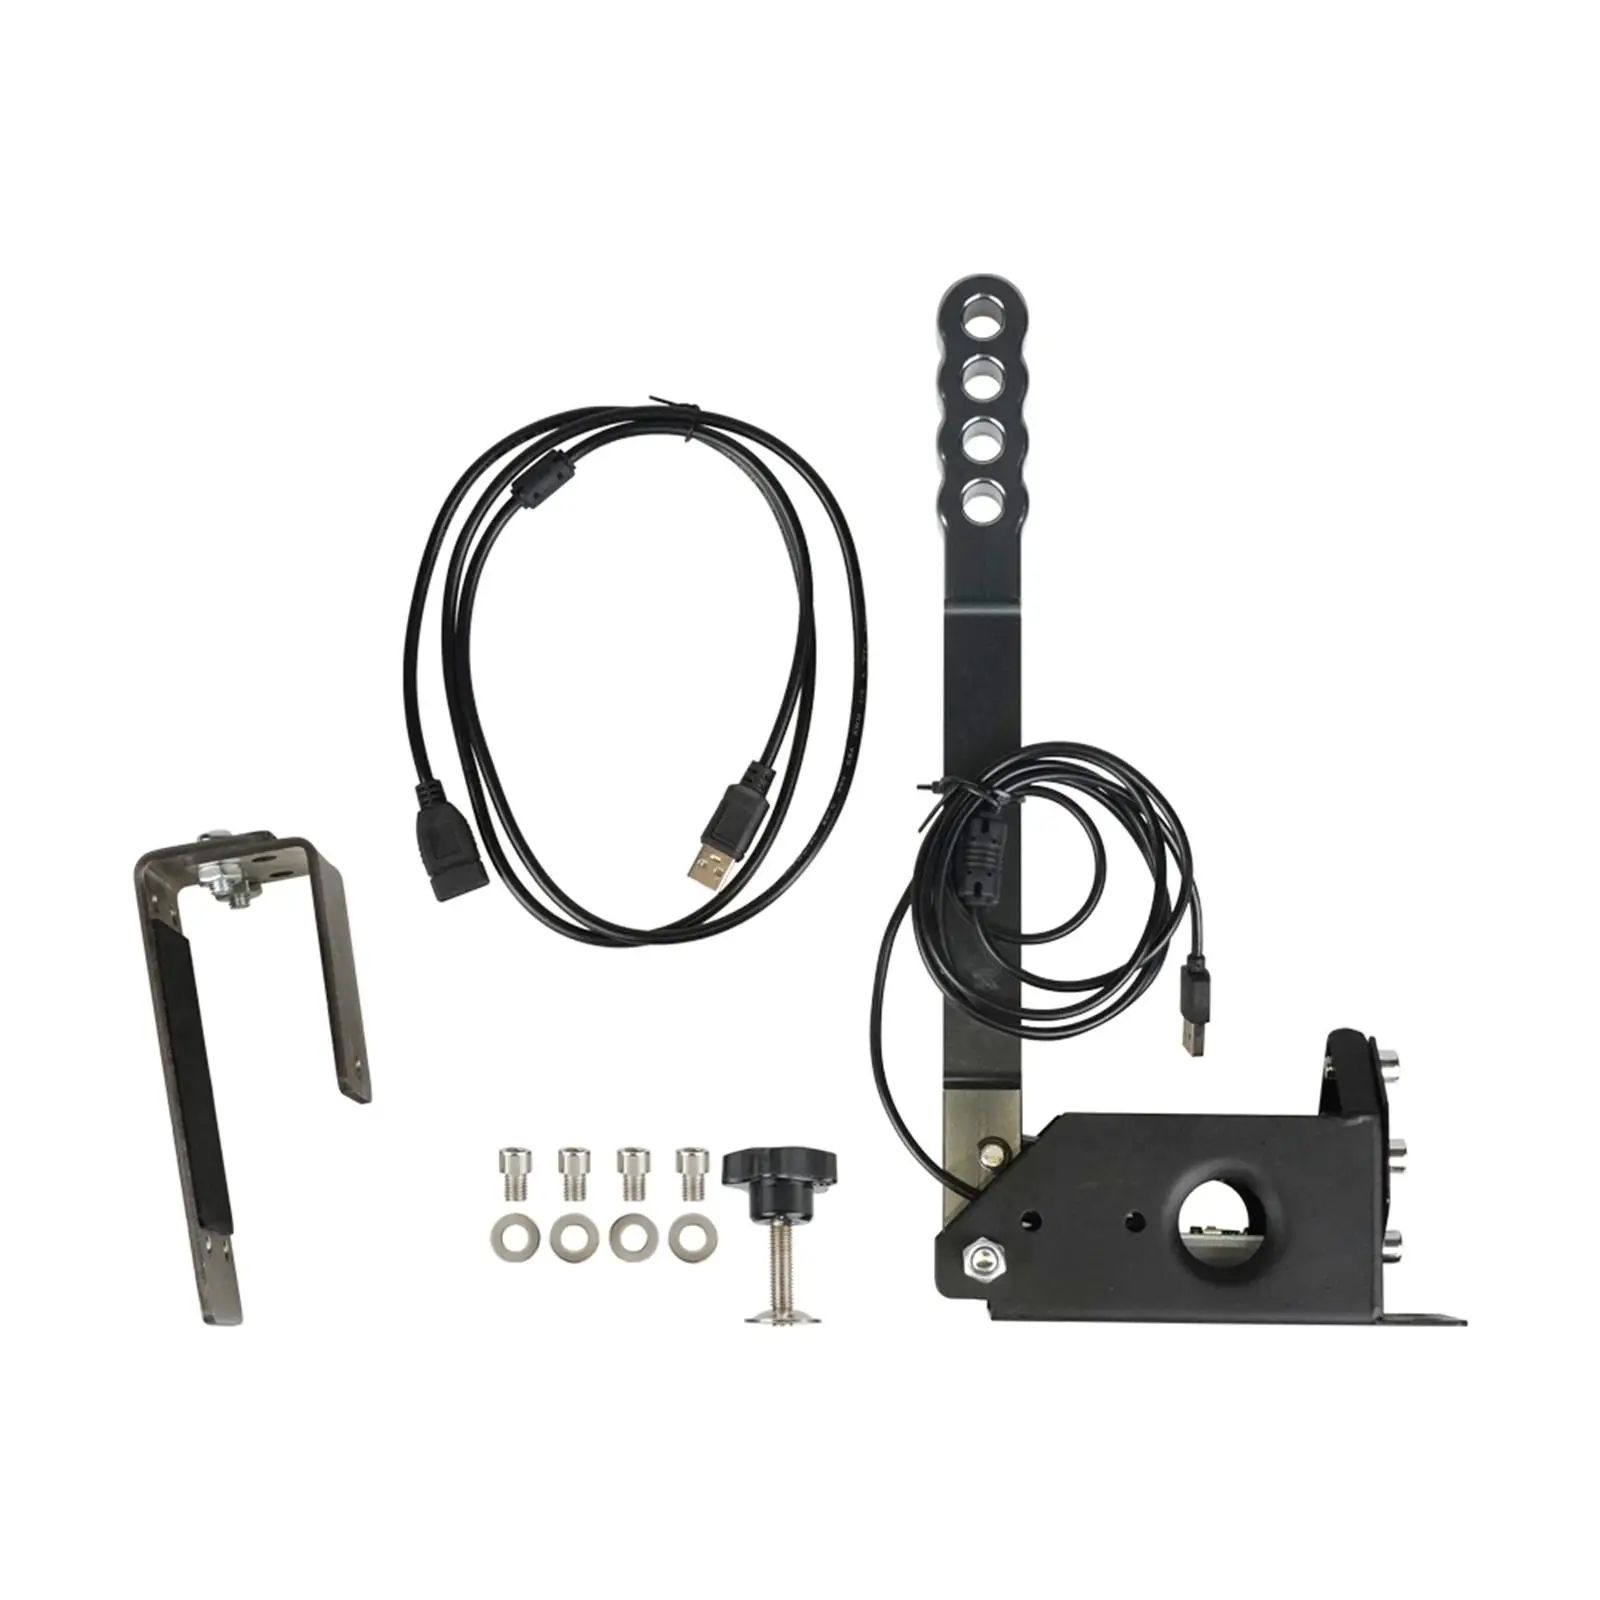 Brake System Handbrake Hall Sensor Easy to Install USB Game Peripherals Handbrake for Logitech G29 G27 G25 PC Racing Games